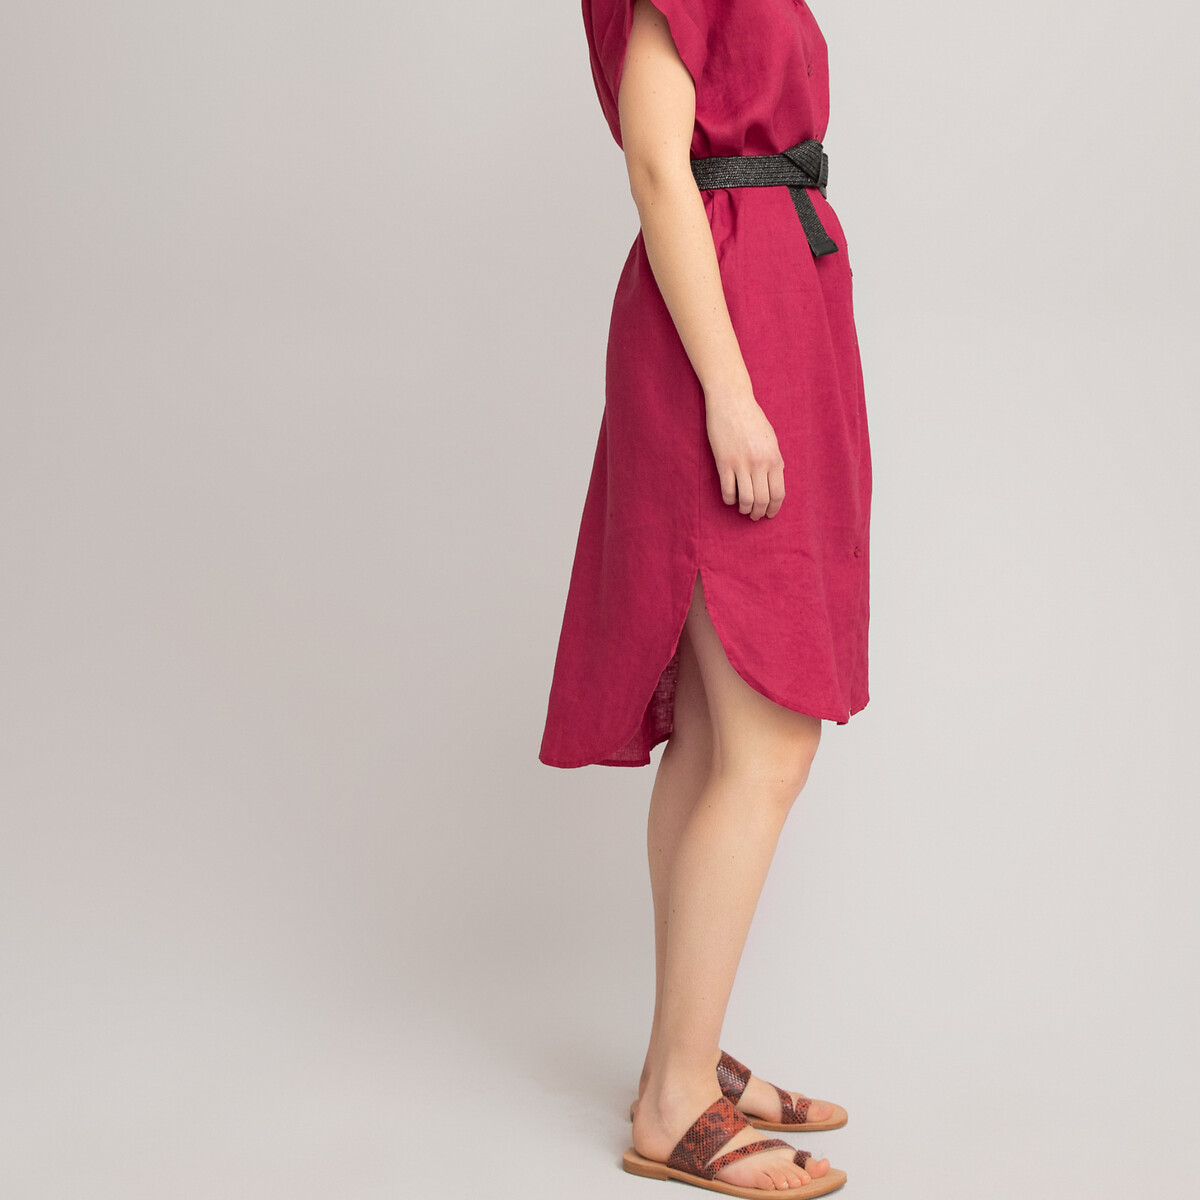 Платье-рубашка LaRedoute С короткими рукавами из льна 38 (FR) - 44 (RUS) розовый, размер 38 (FR) - 44 (RUS) С короткими рукавами из льна 38 (FR) - 44 (RUS) розовый - фото 3